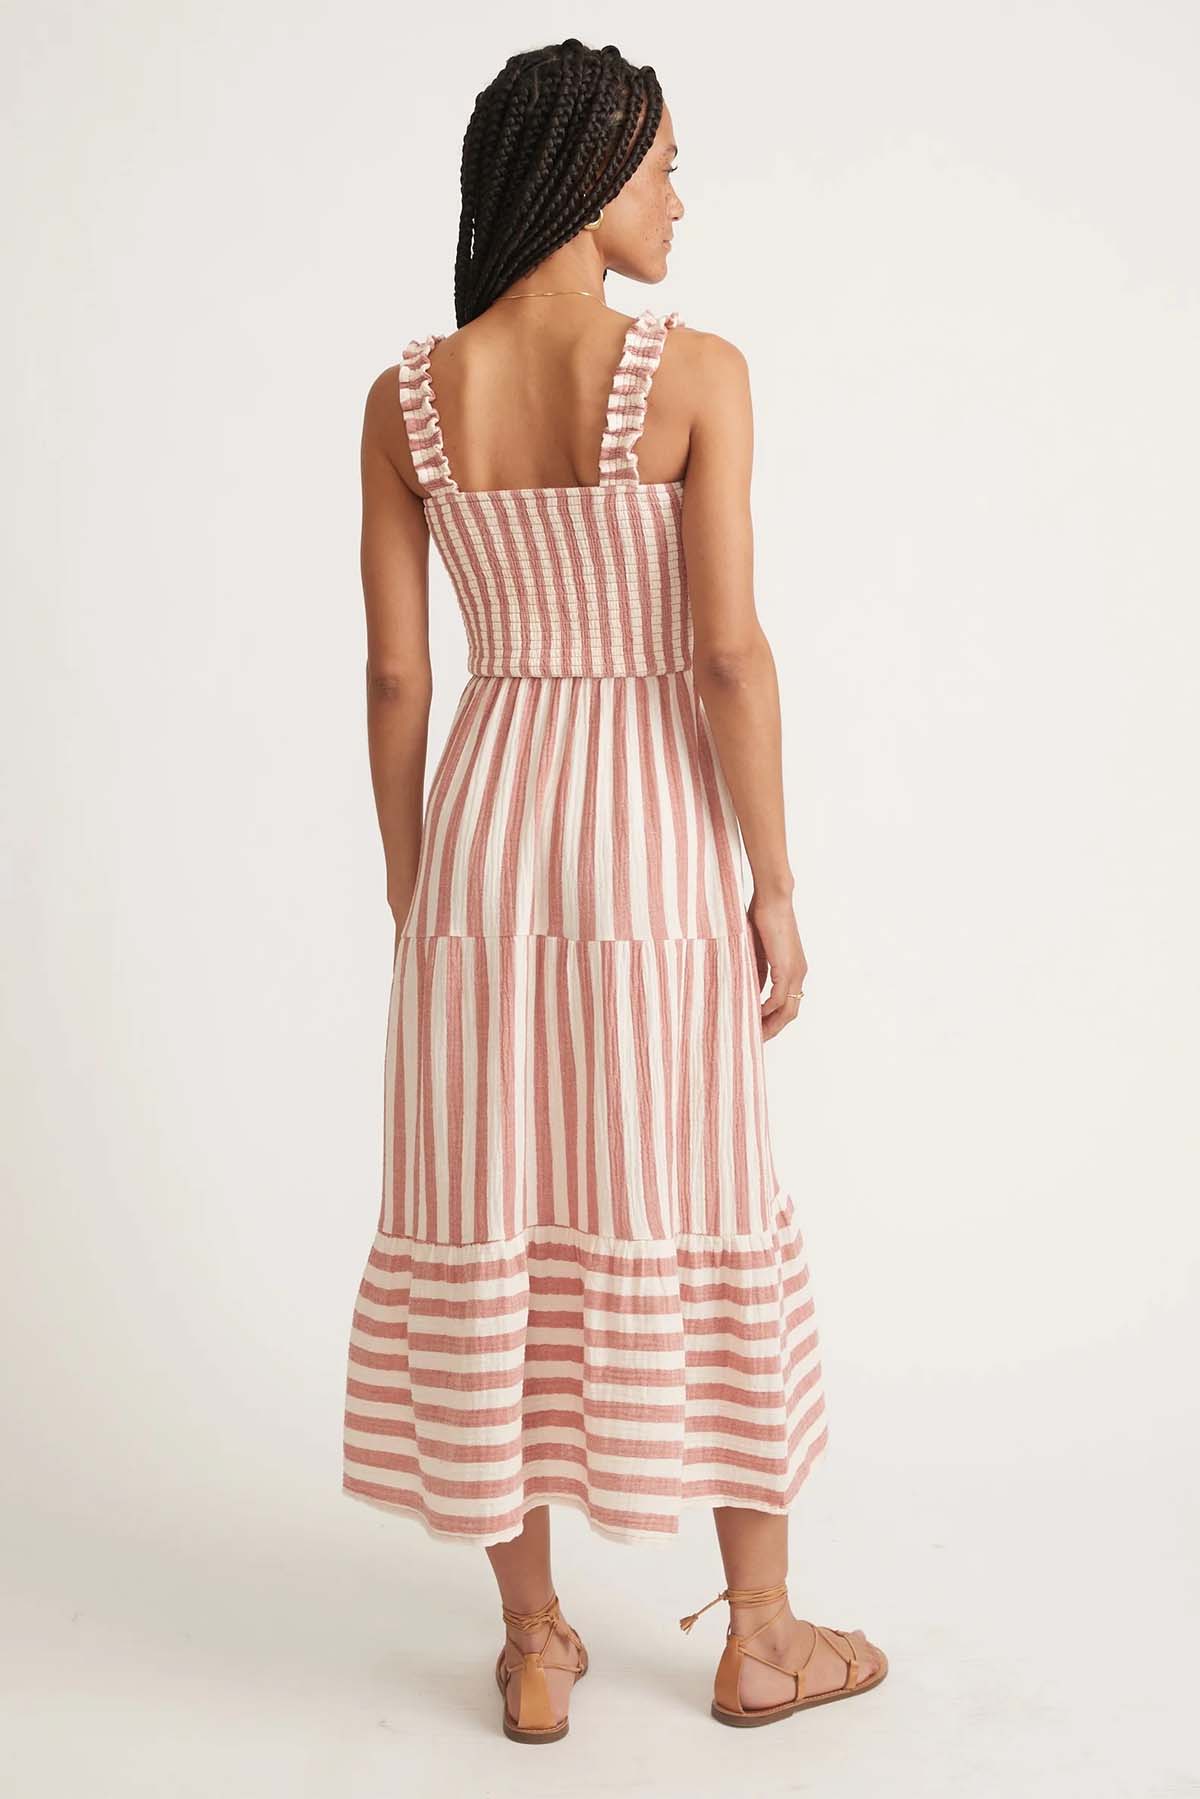 Marine Layer - Selene Maxi Dress - Auburn/White Stripe - Back